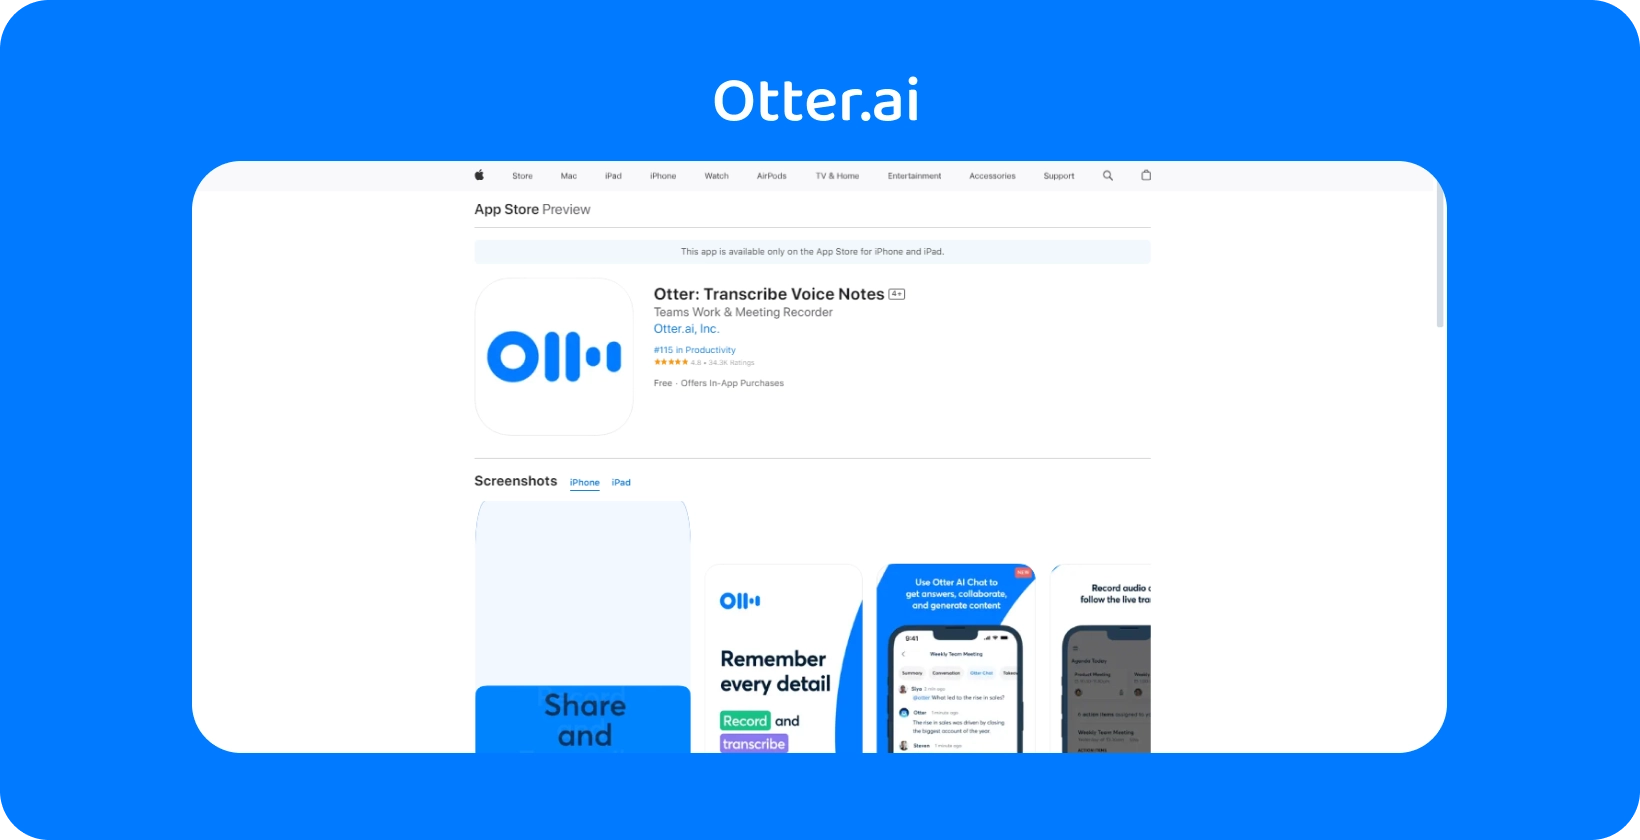 Otter.ai App Store预览版展示了 iPhone 上的应用程序的转录和语音笔记功能。